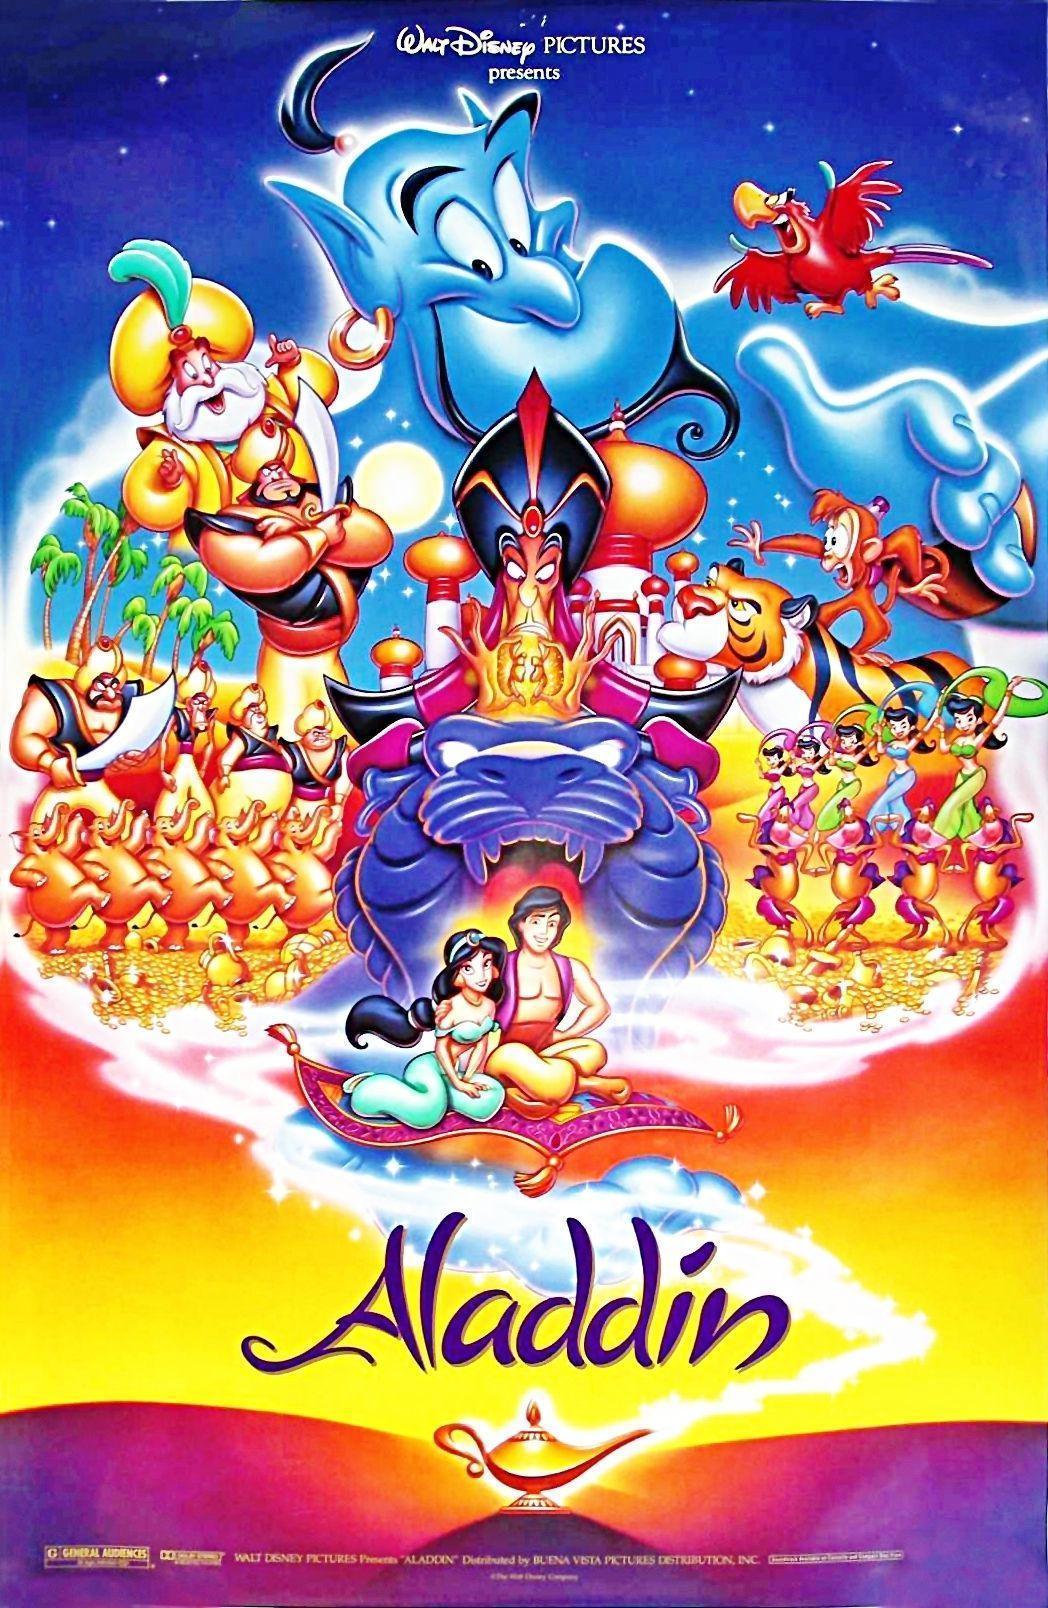 Aladdin Poster Disney Full HD Wallpapers for Mac